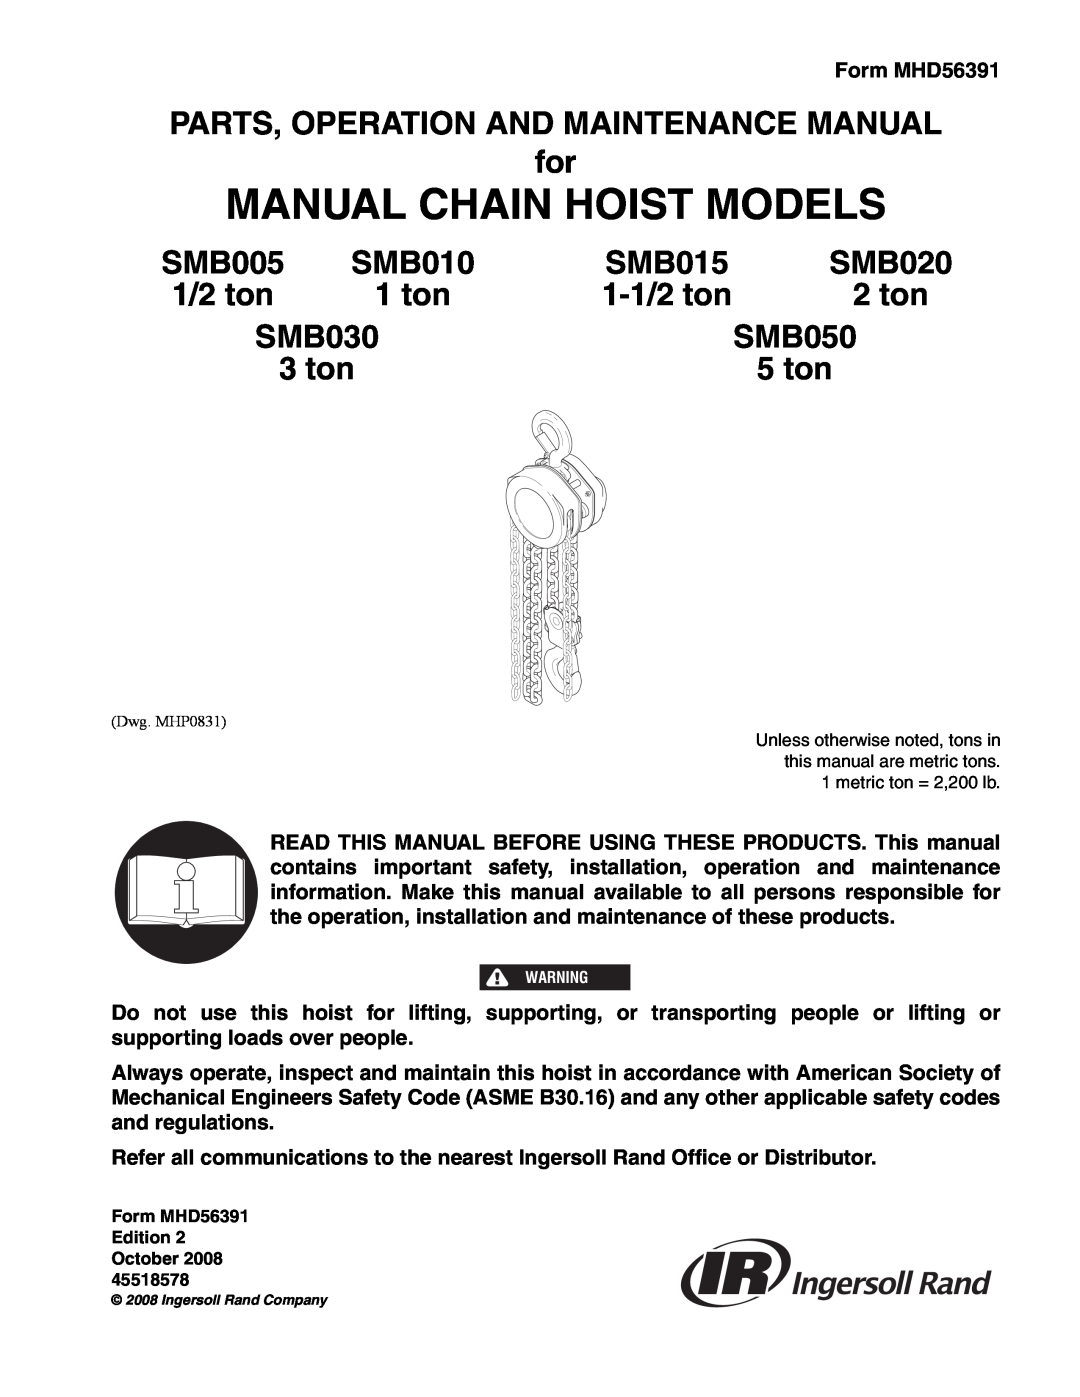 Ingersoll-Rand SMB015 manual Manual Chain Hoist Models, PARTS, OPERATION AND MAINTENANCE MANUAL for, SMB005, SMB010, 1 ton 